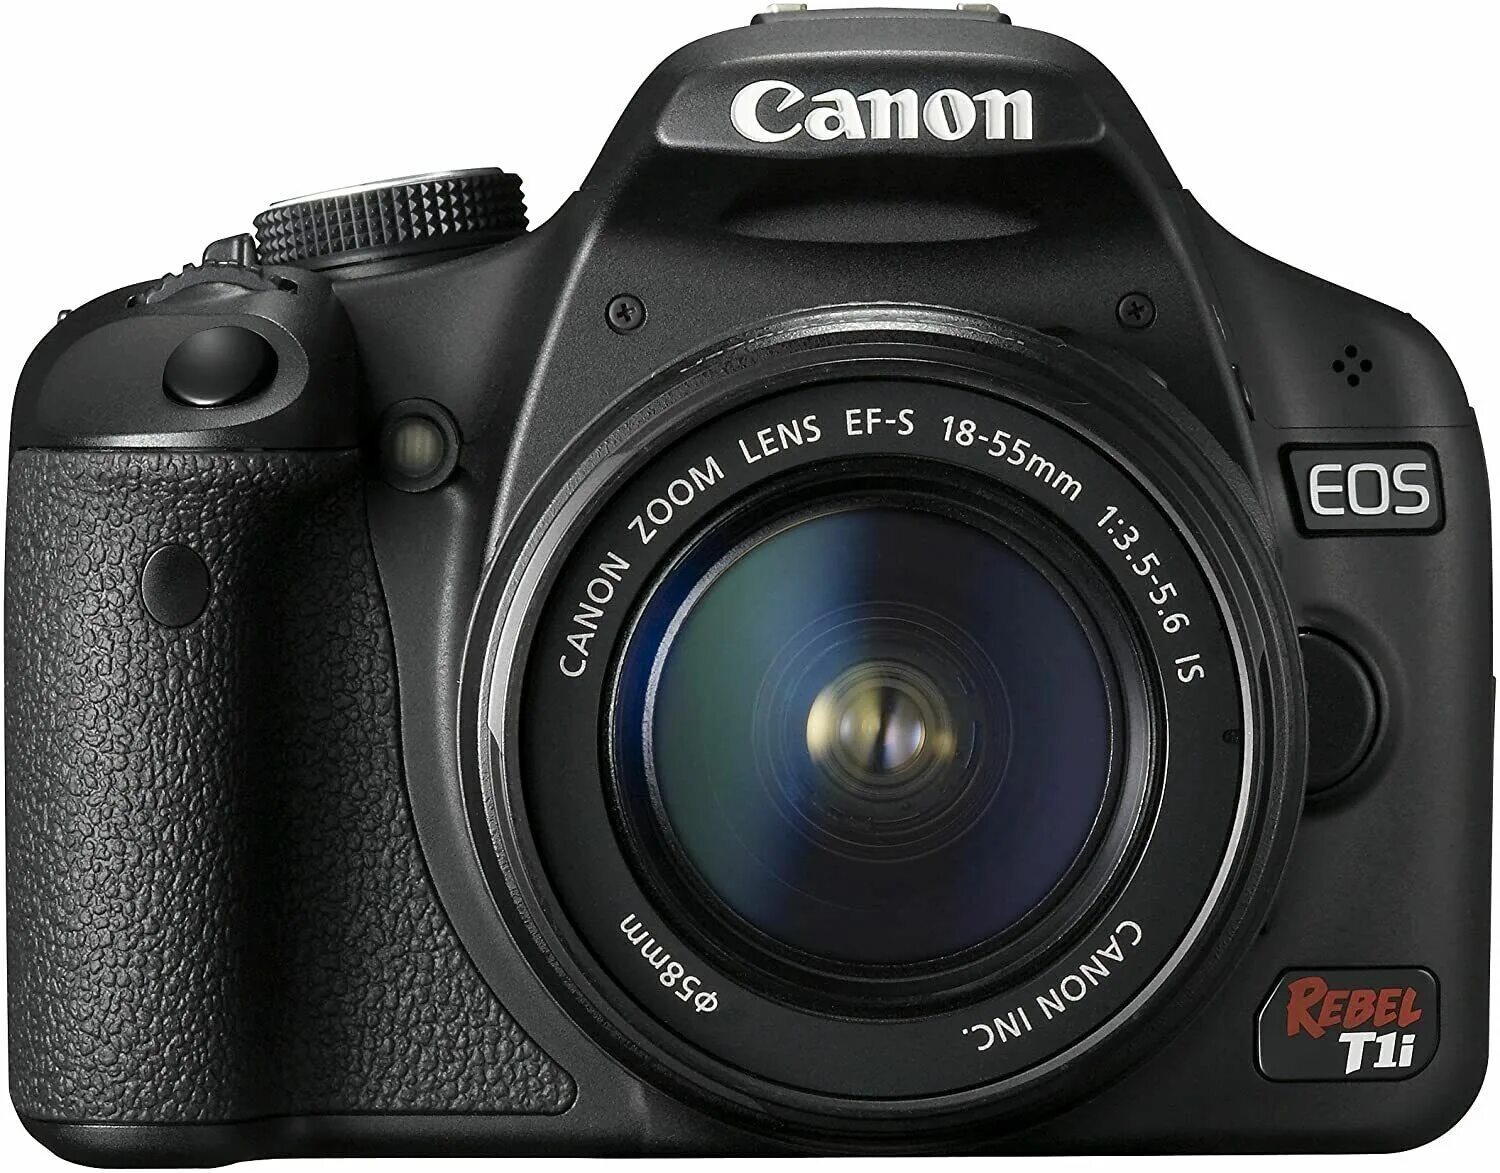 Canon EOS 750d. Canon EOS 800d Kit. Nikon d3400 Kit af-p. Nikon d5600 Kit. Canon купить екатеринбург